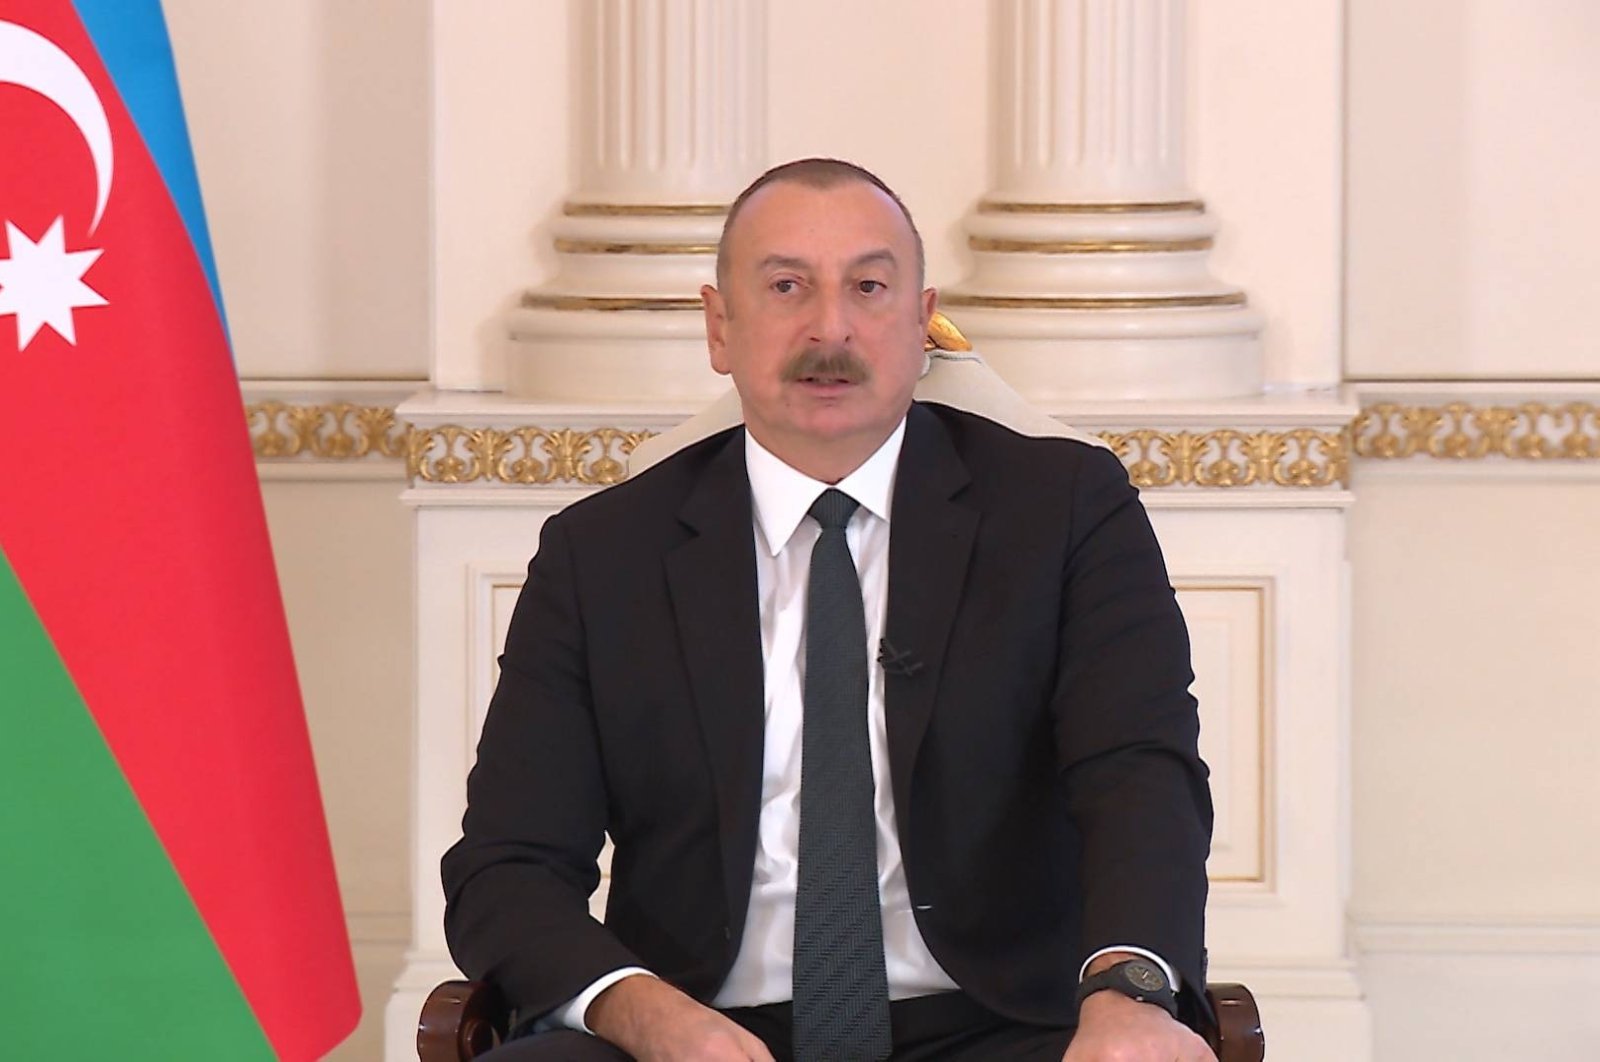 Azerbaijani President Ilham Aliyev speaks at a TV interview in Baku, Azerbaijan, Jan. 10, 2023. (IHA Photo)